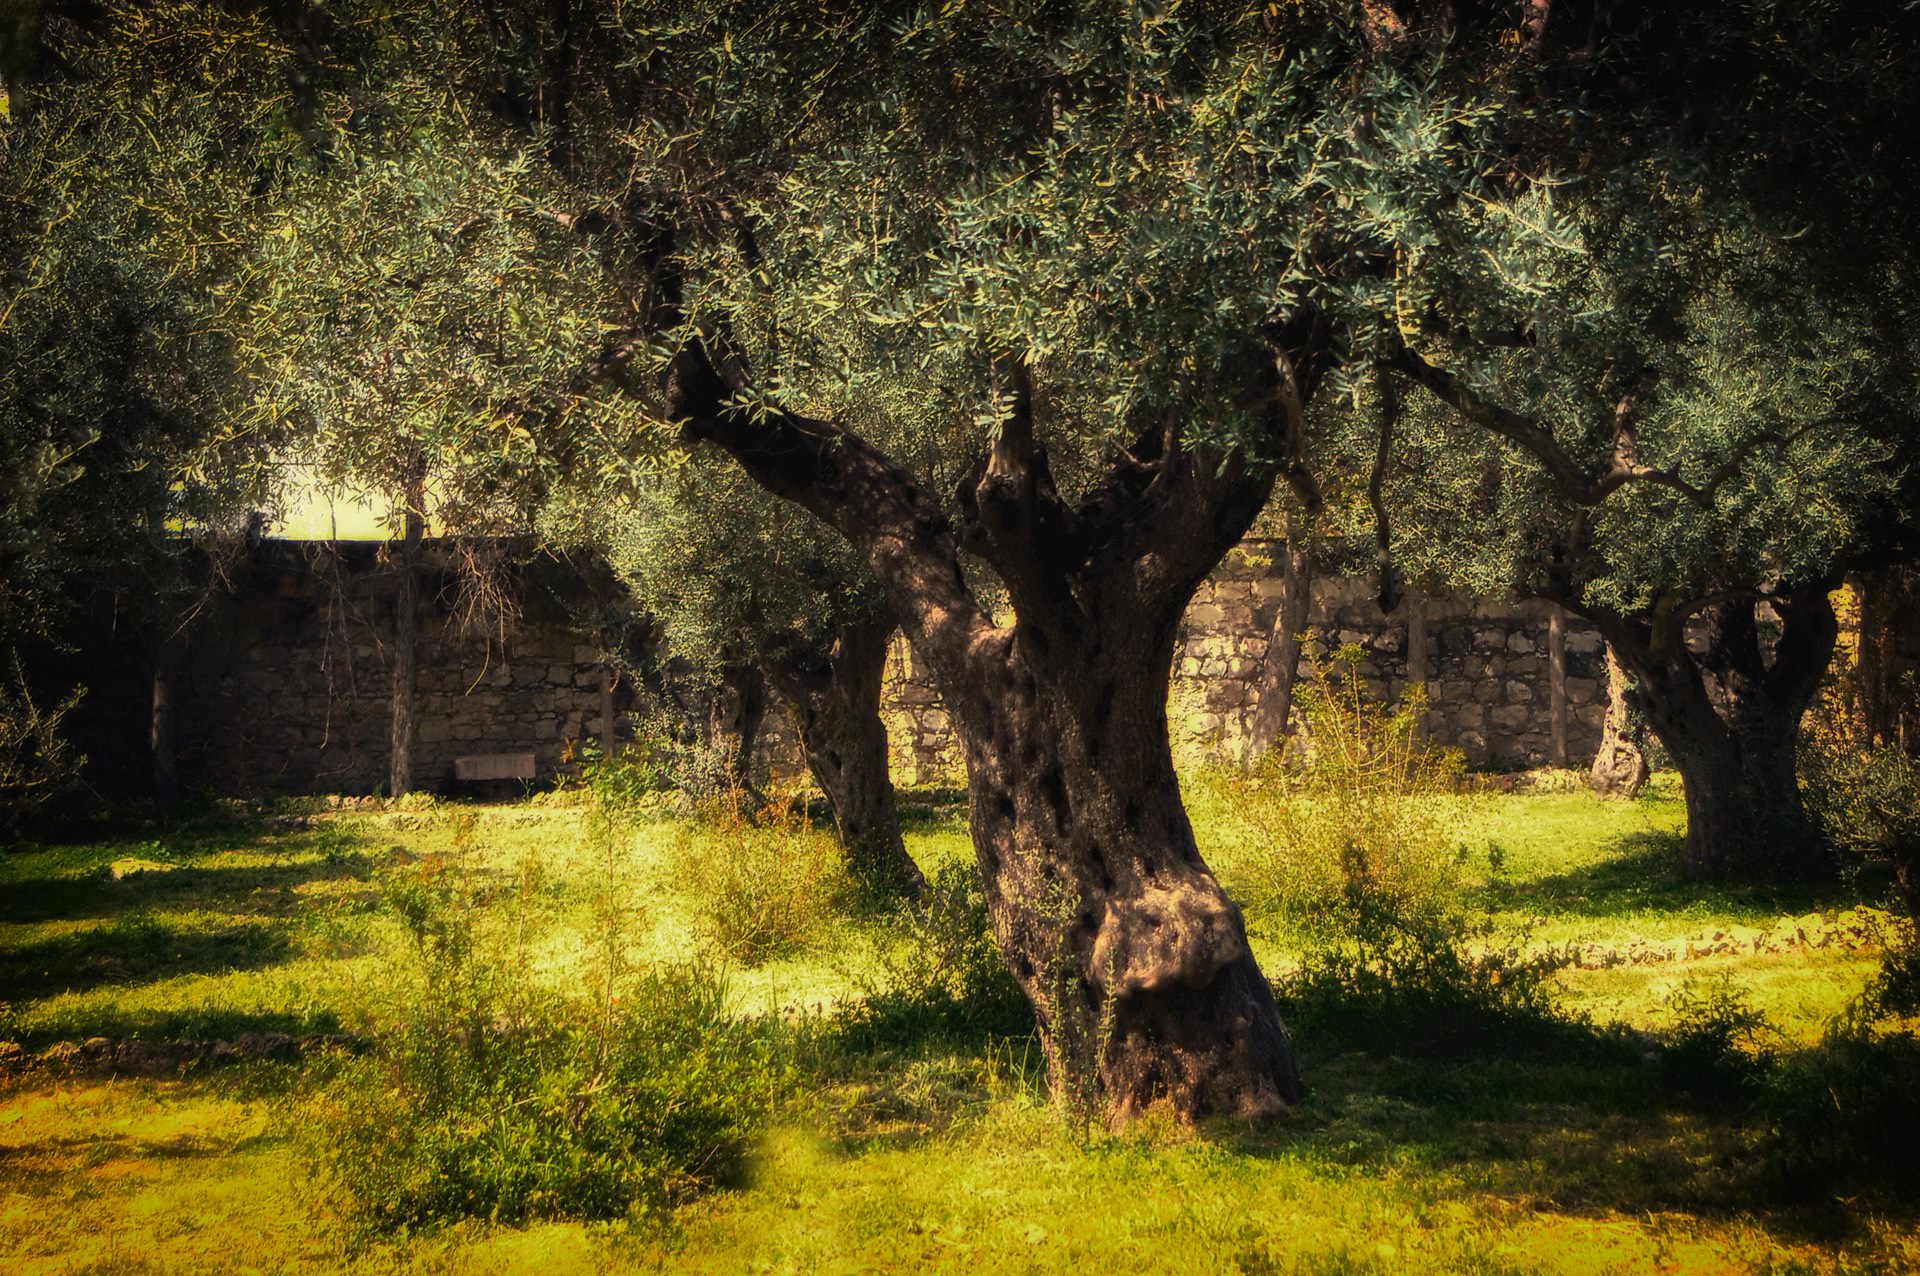 Part 8 - Gethsemane